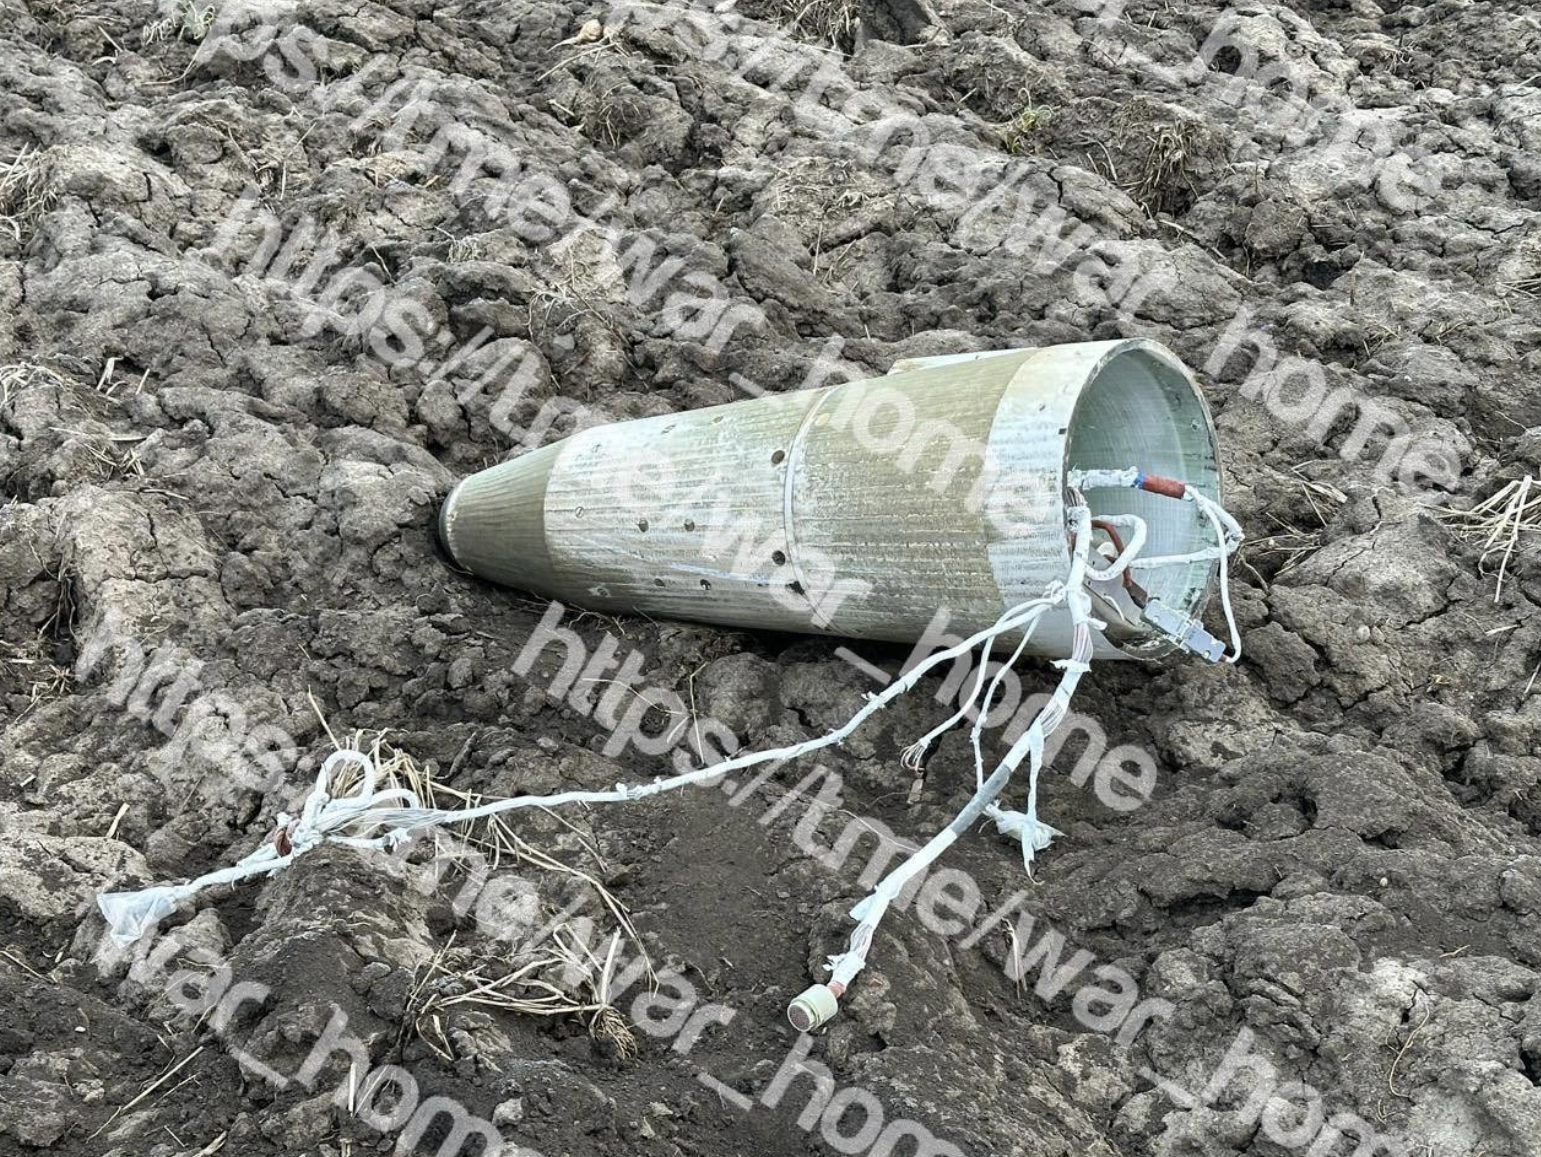 Joint Direct Attack Munition (JDAM) photo